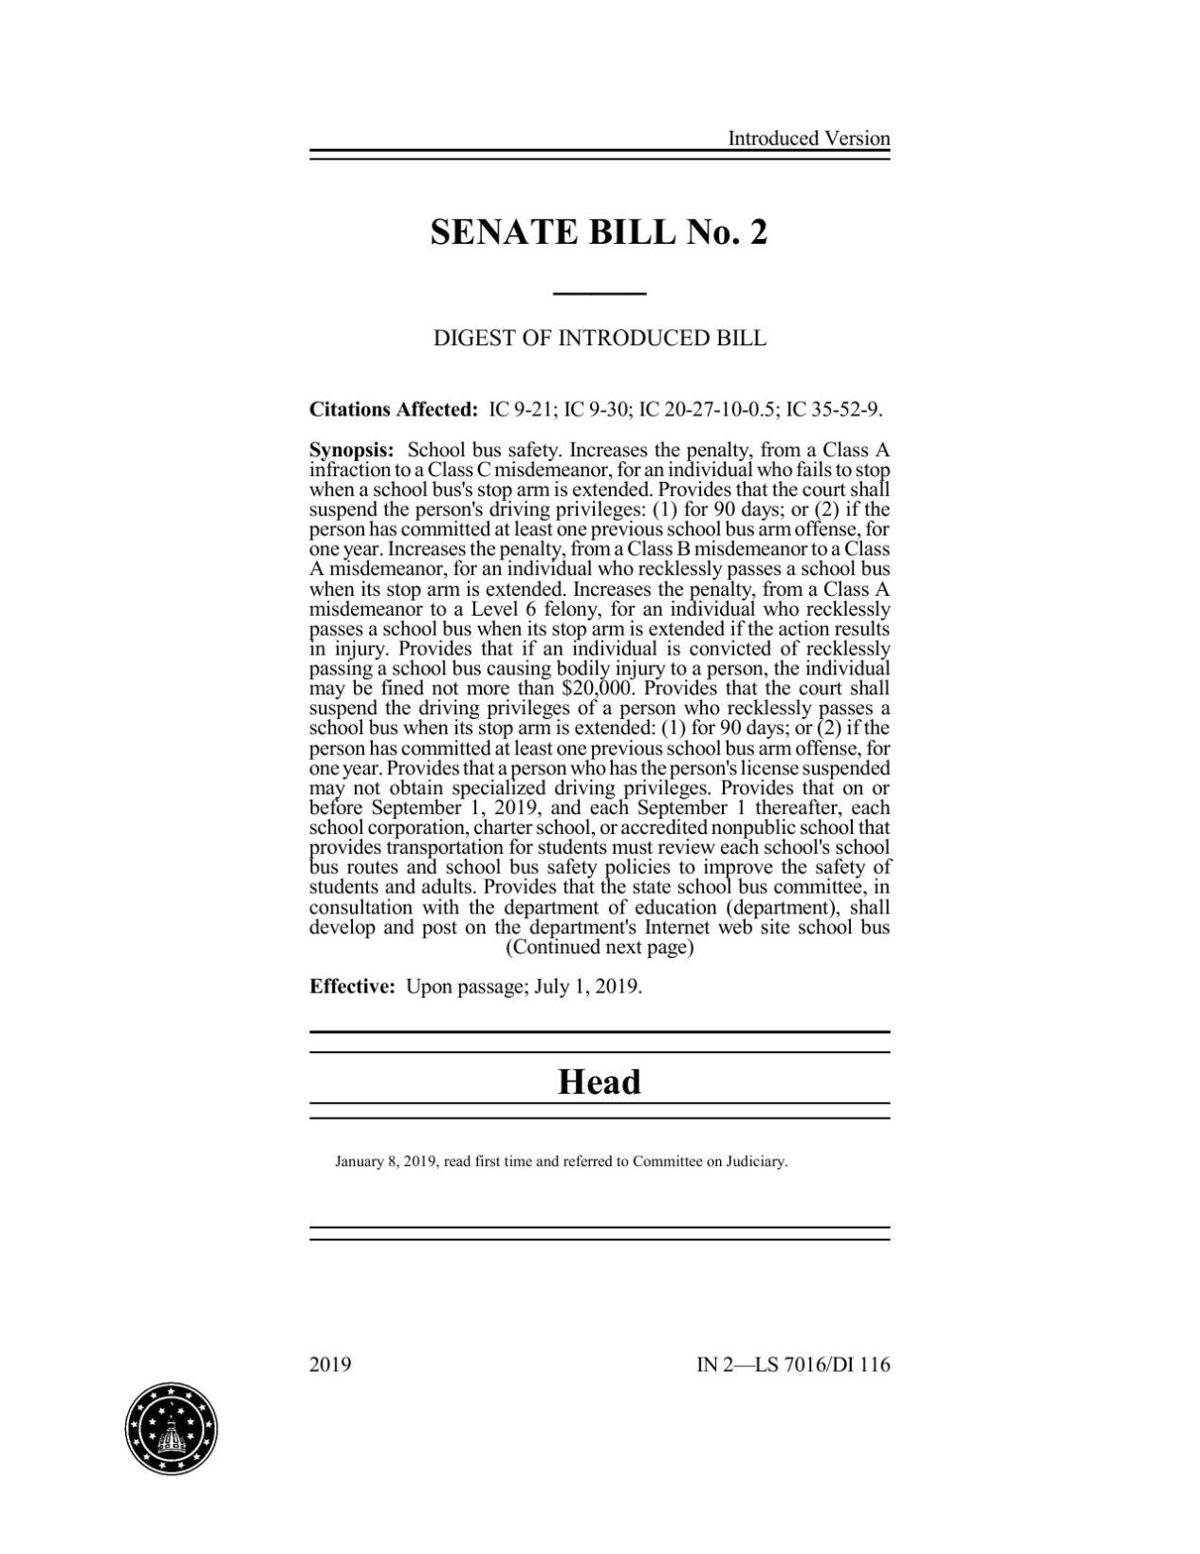 Senate Bill 2